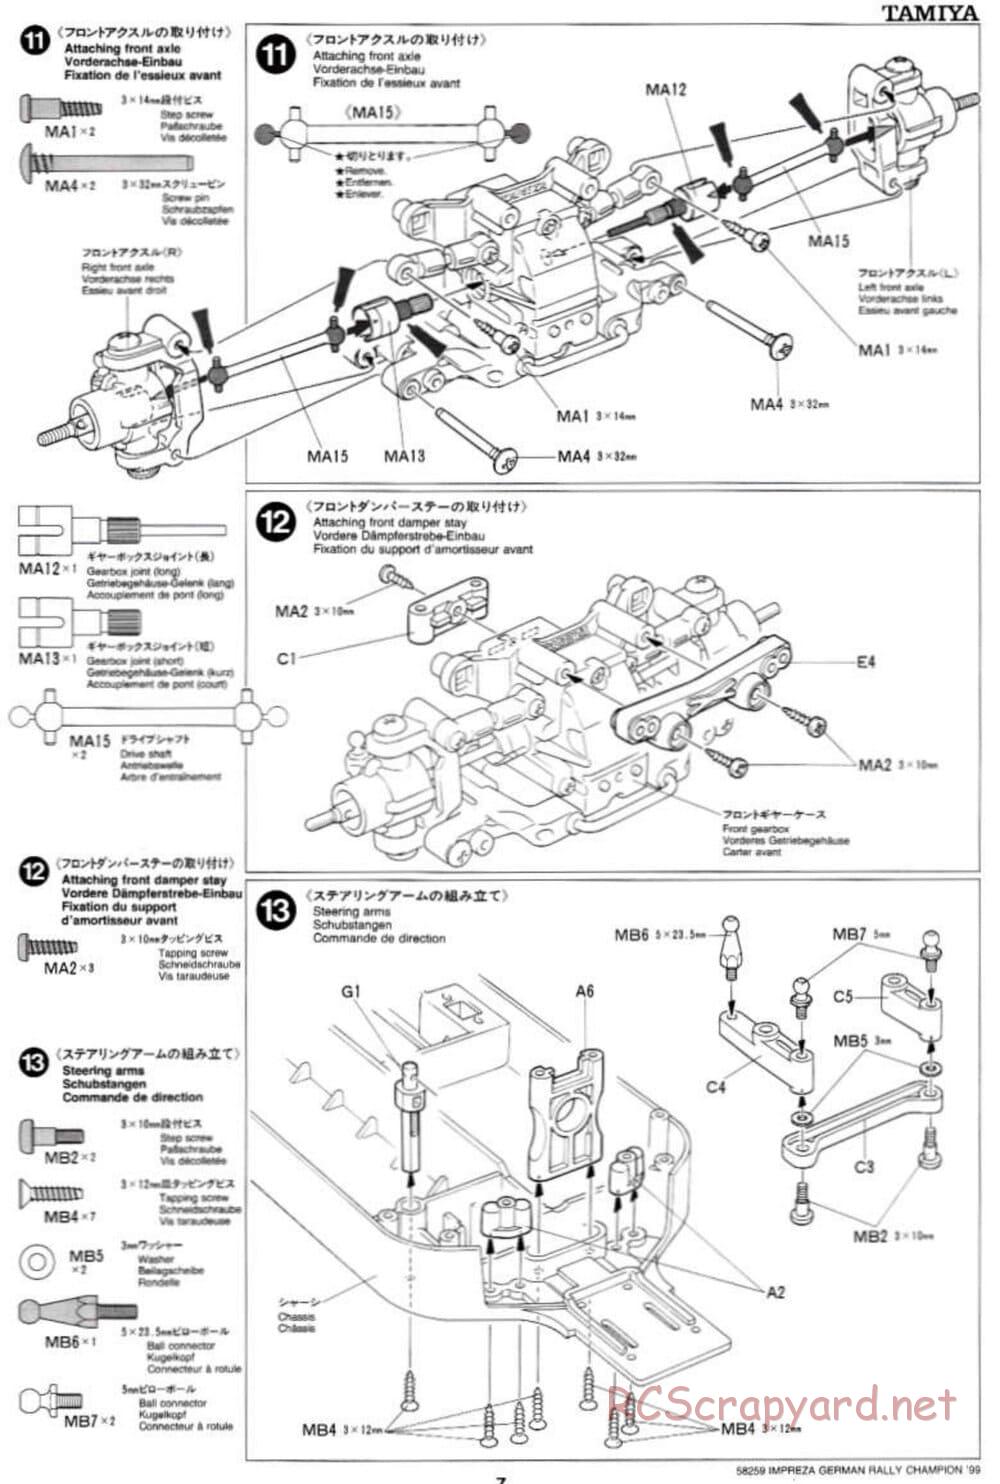 Tamiya - Subaru Impreza German Rally Champion 99 - TB-01 Chassis - Manual - Page 7